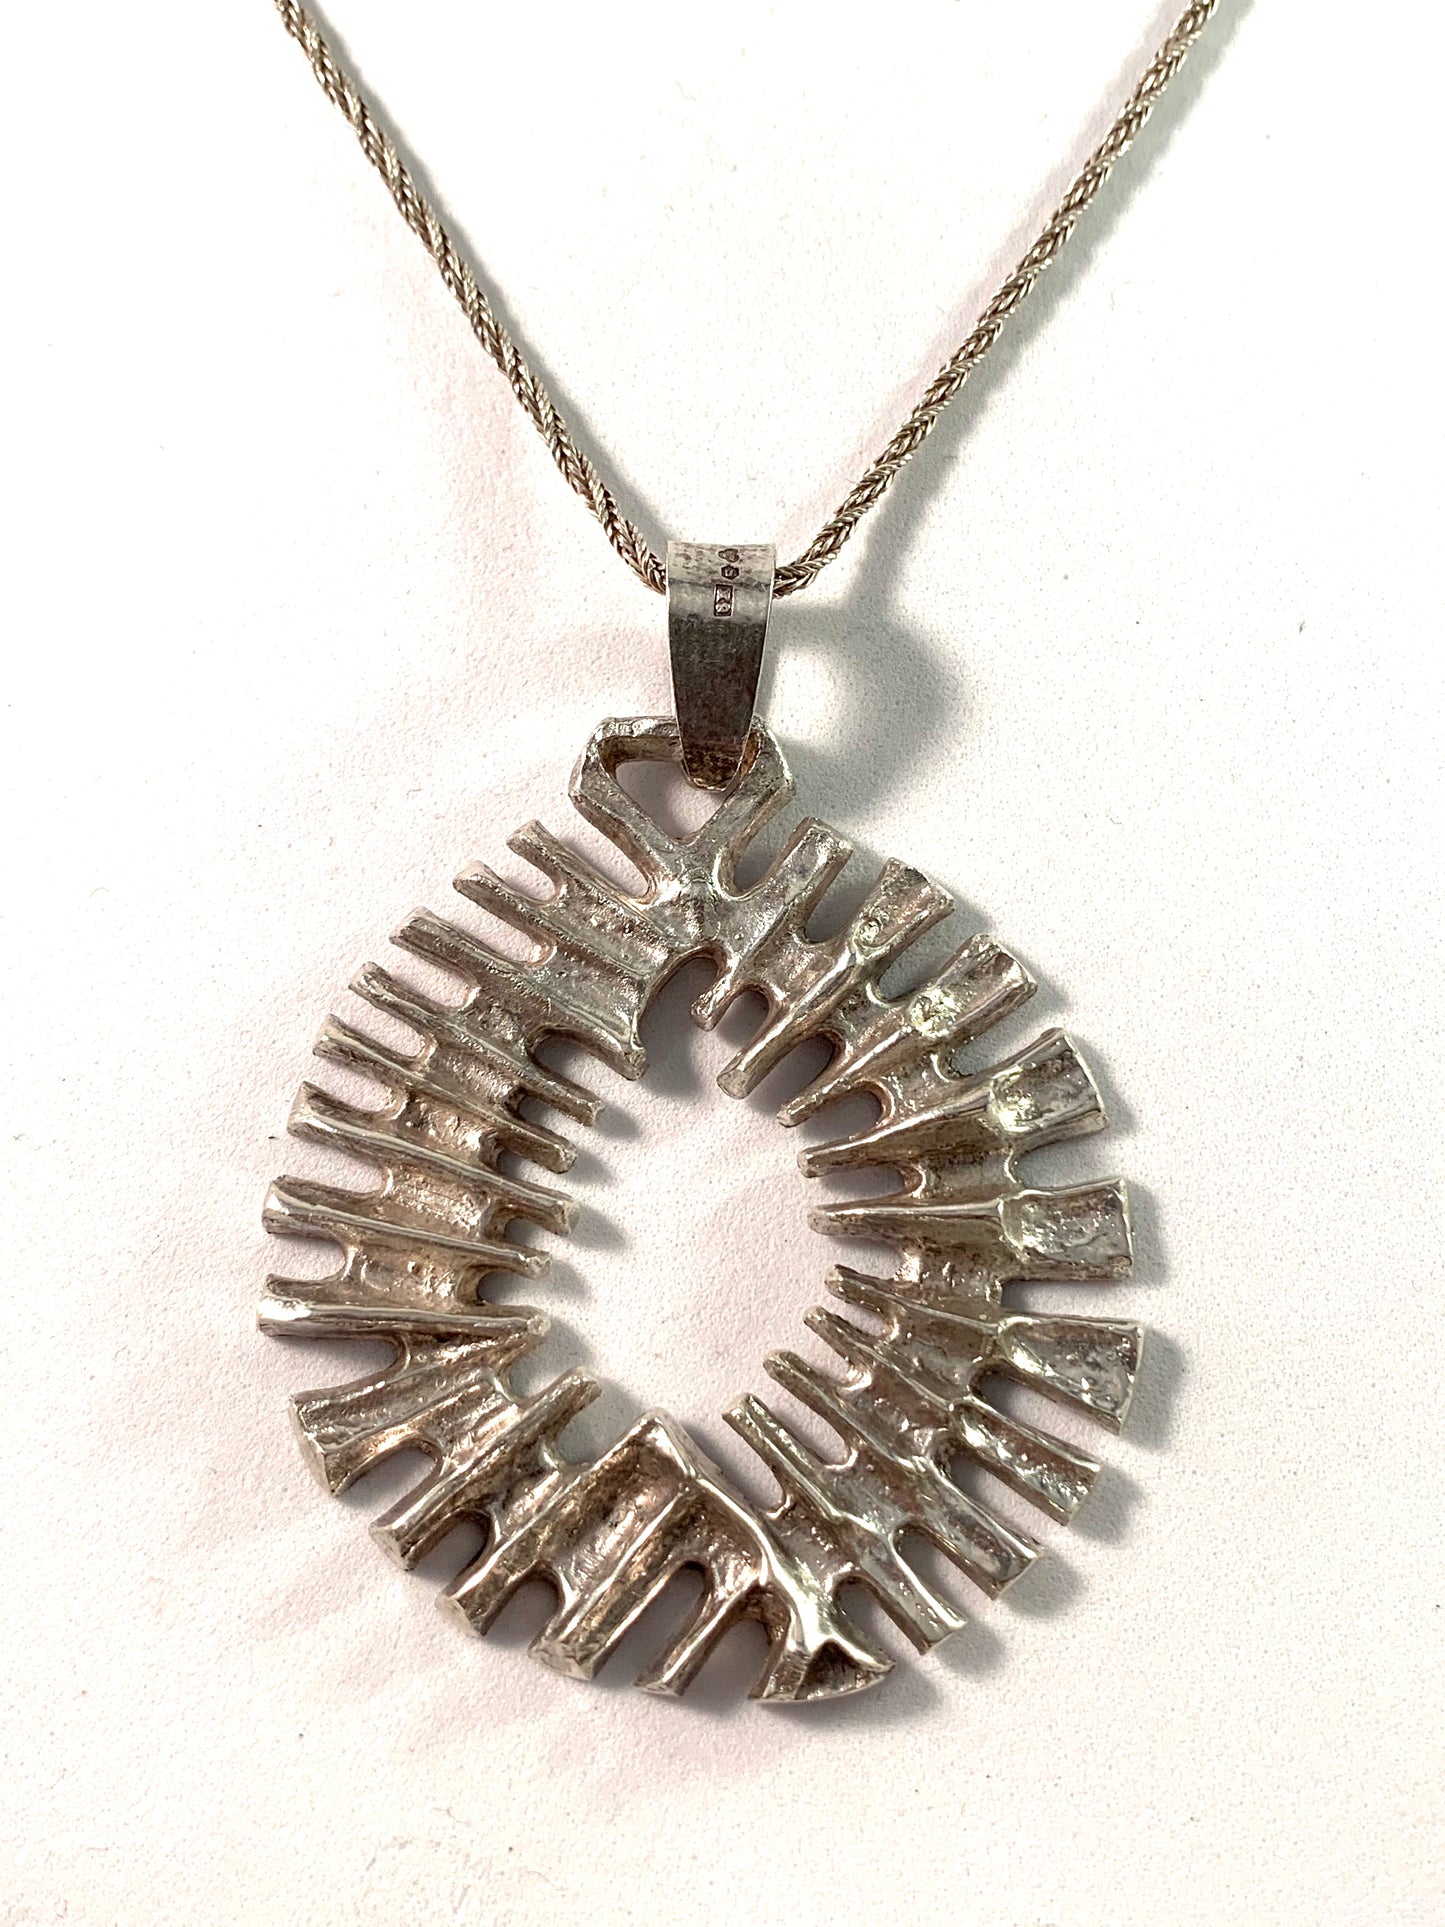 G Dahlgren, Sweden 1972 Silver Modernist Pendant Necklace.